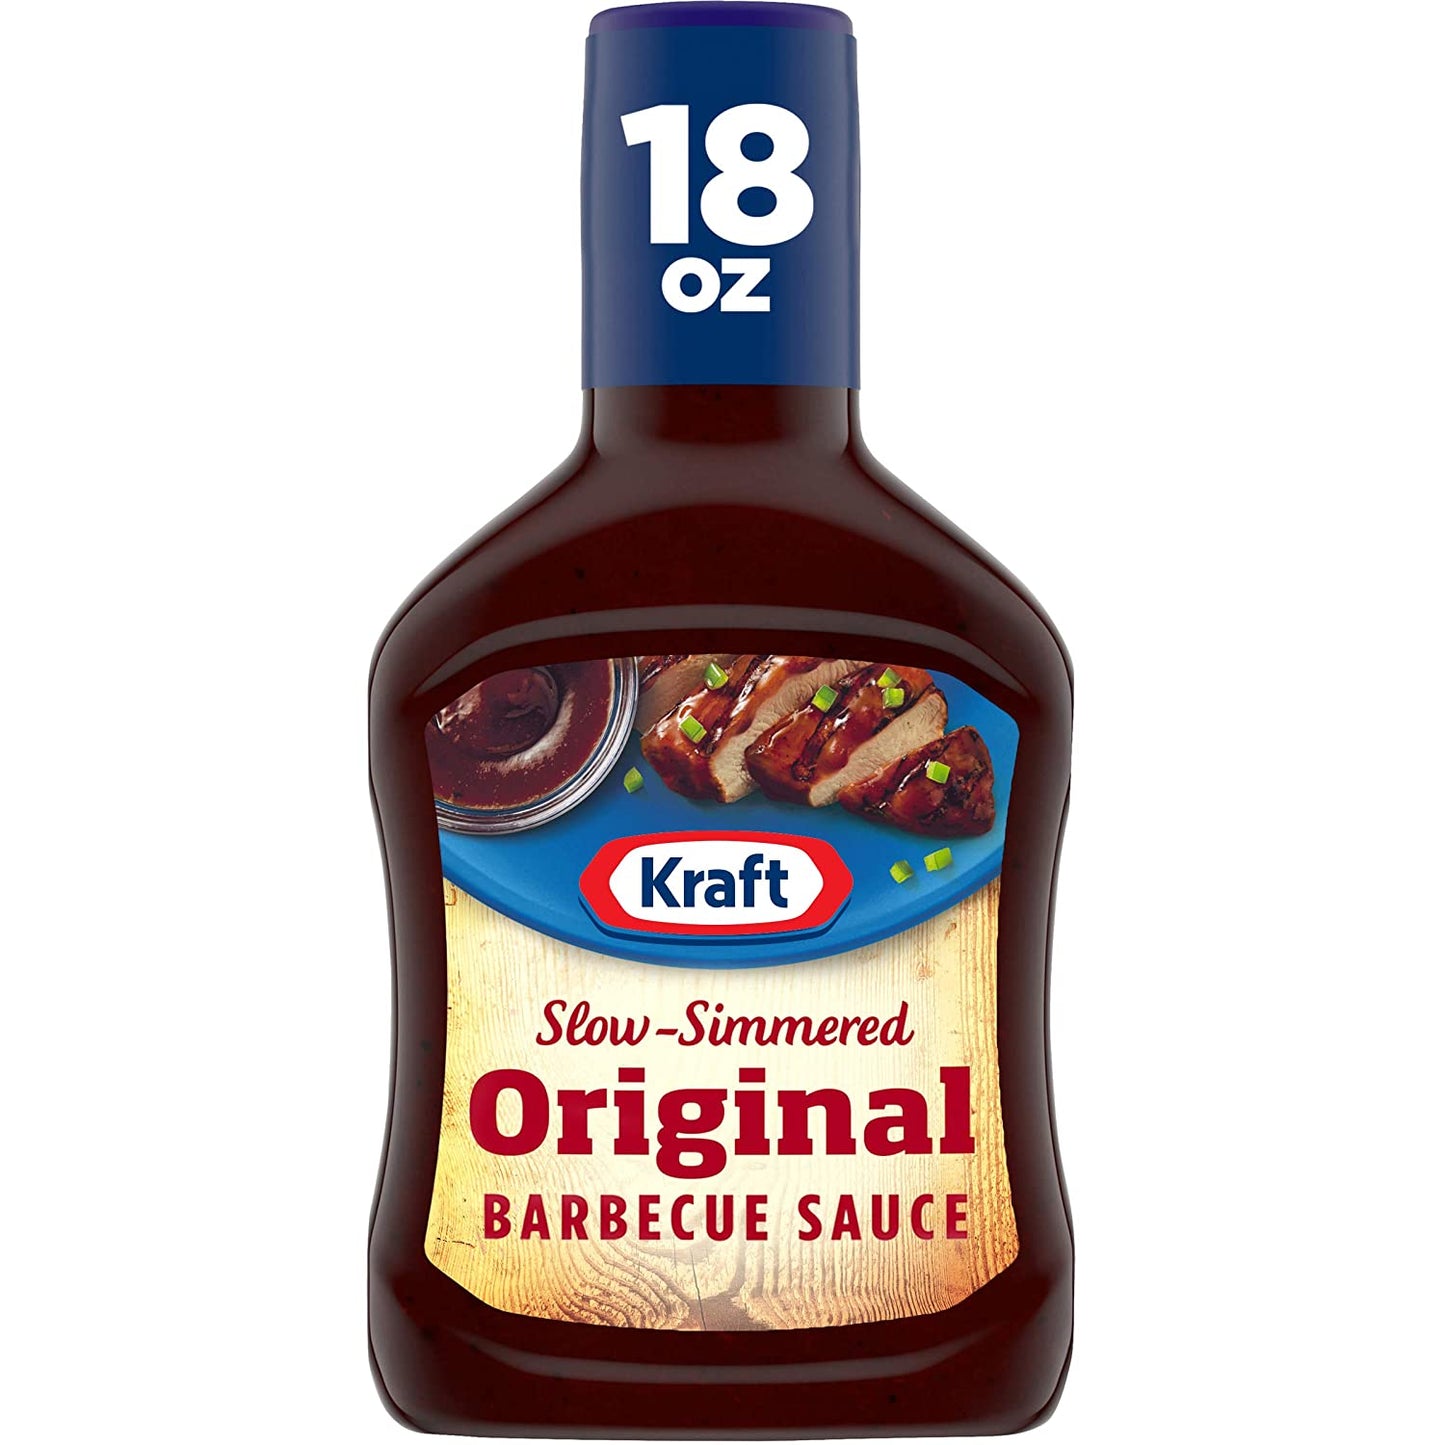 Kraft Original Slow-Simmered BBQ Barbecue Sauce (18 oz Bottle)